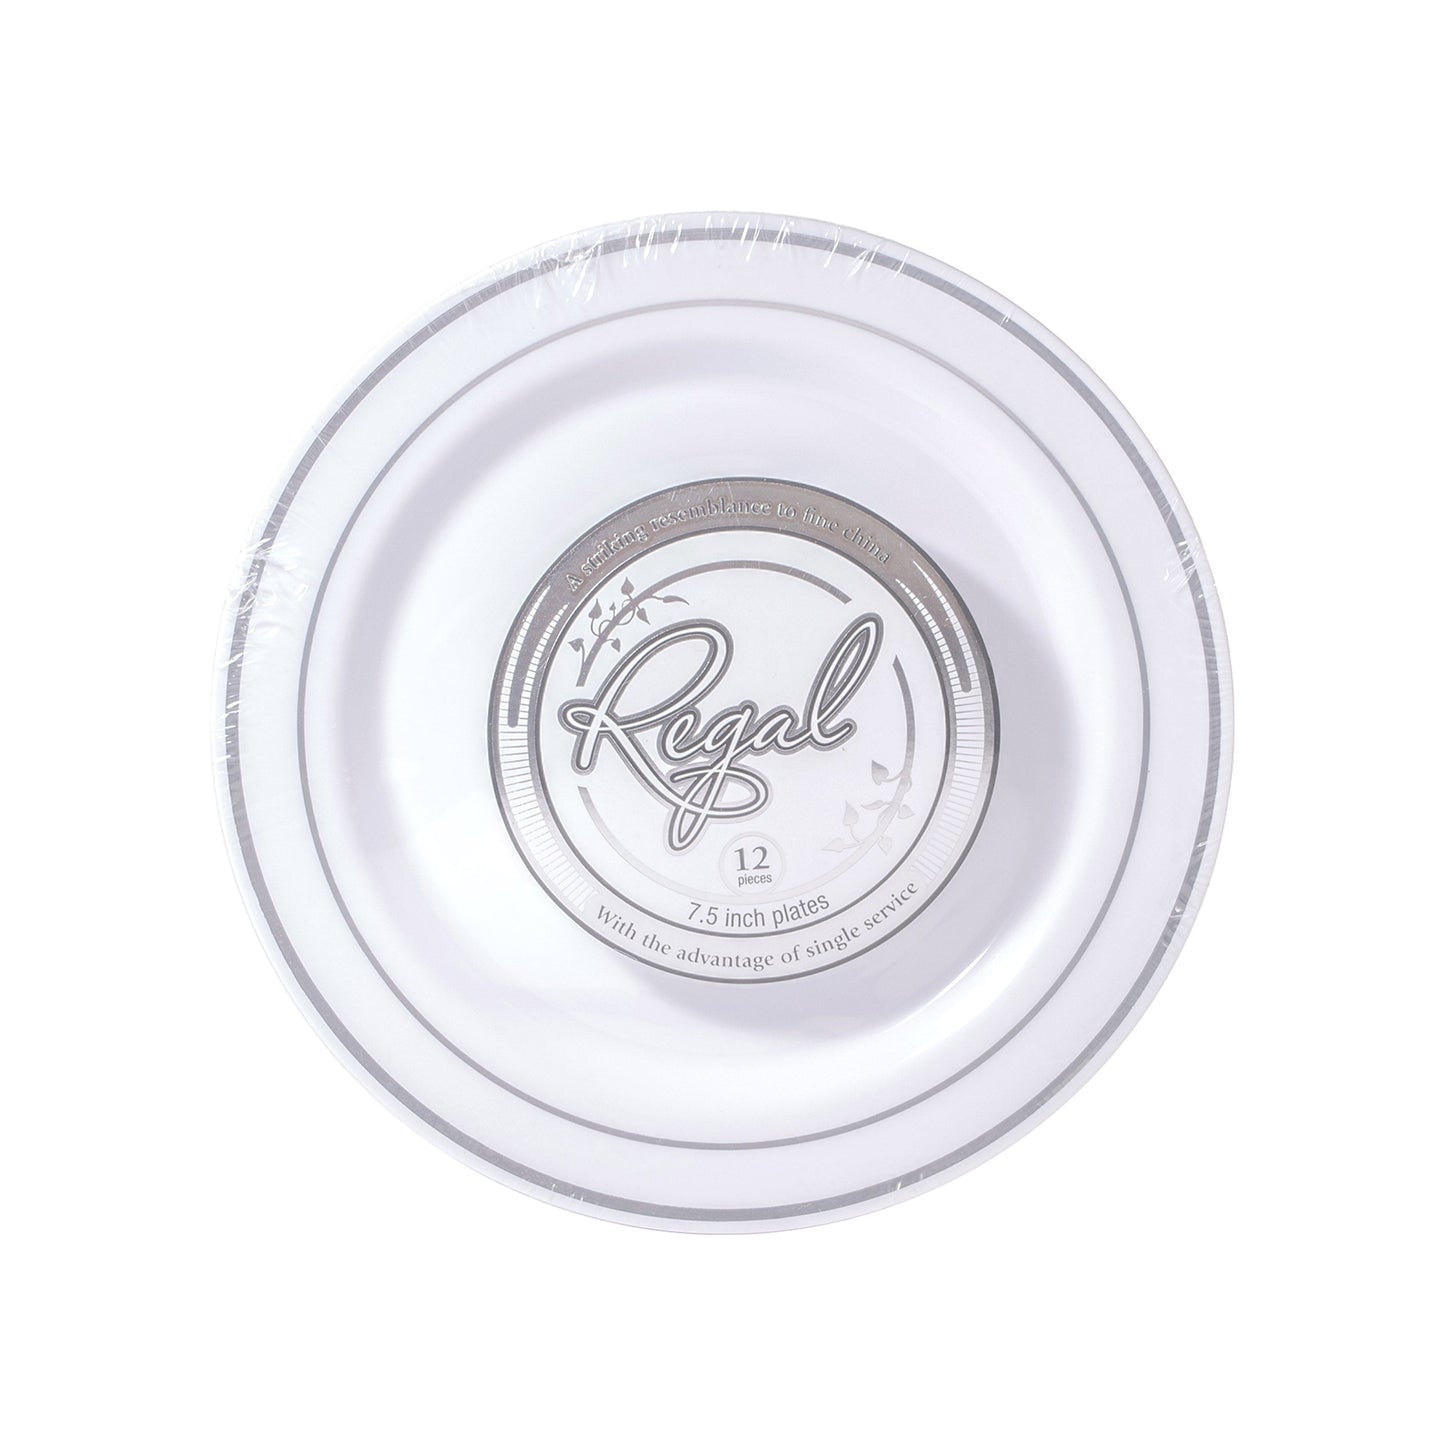 Regal 7.5in Round White with Silver Rim Plastic Plates 12ct